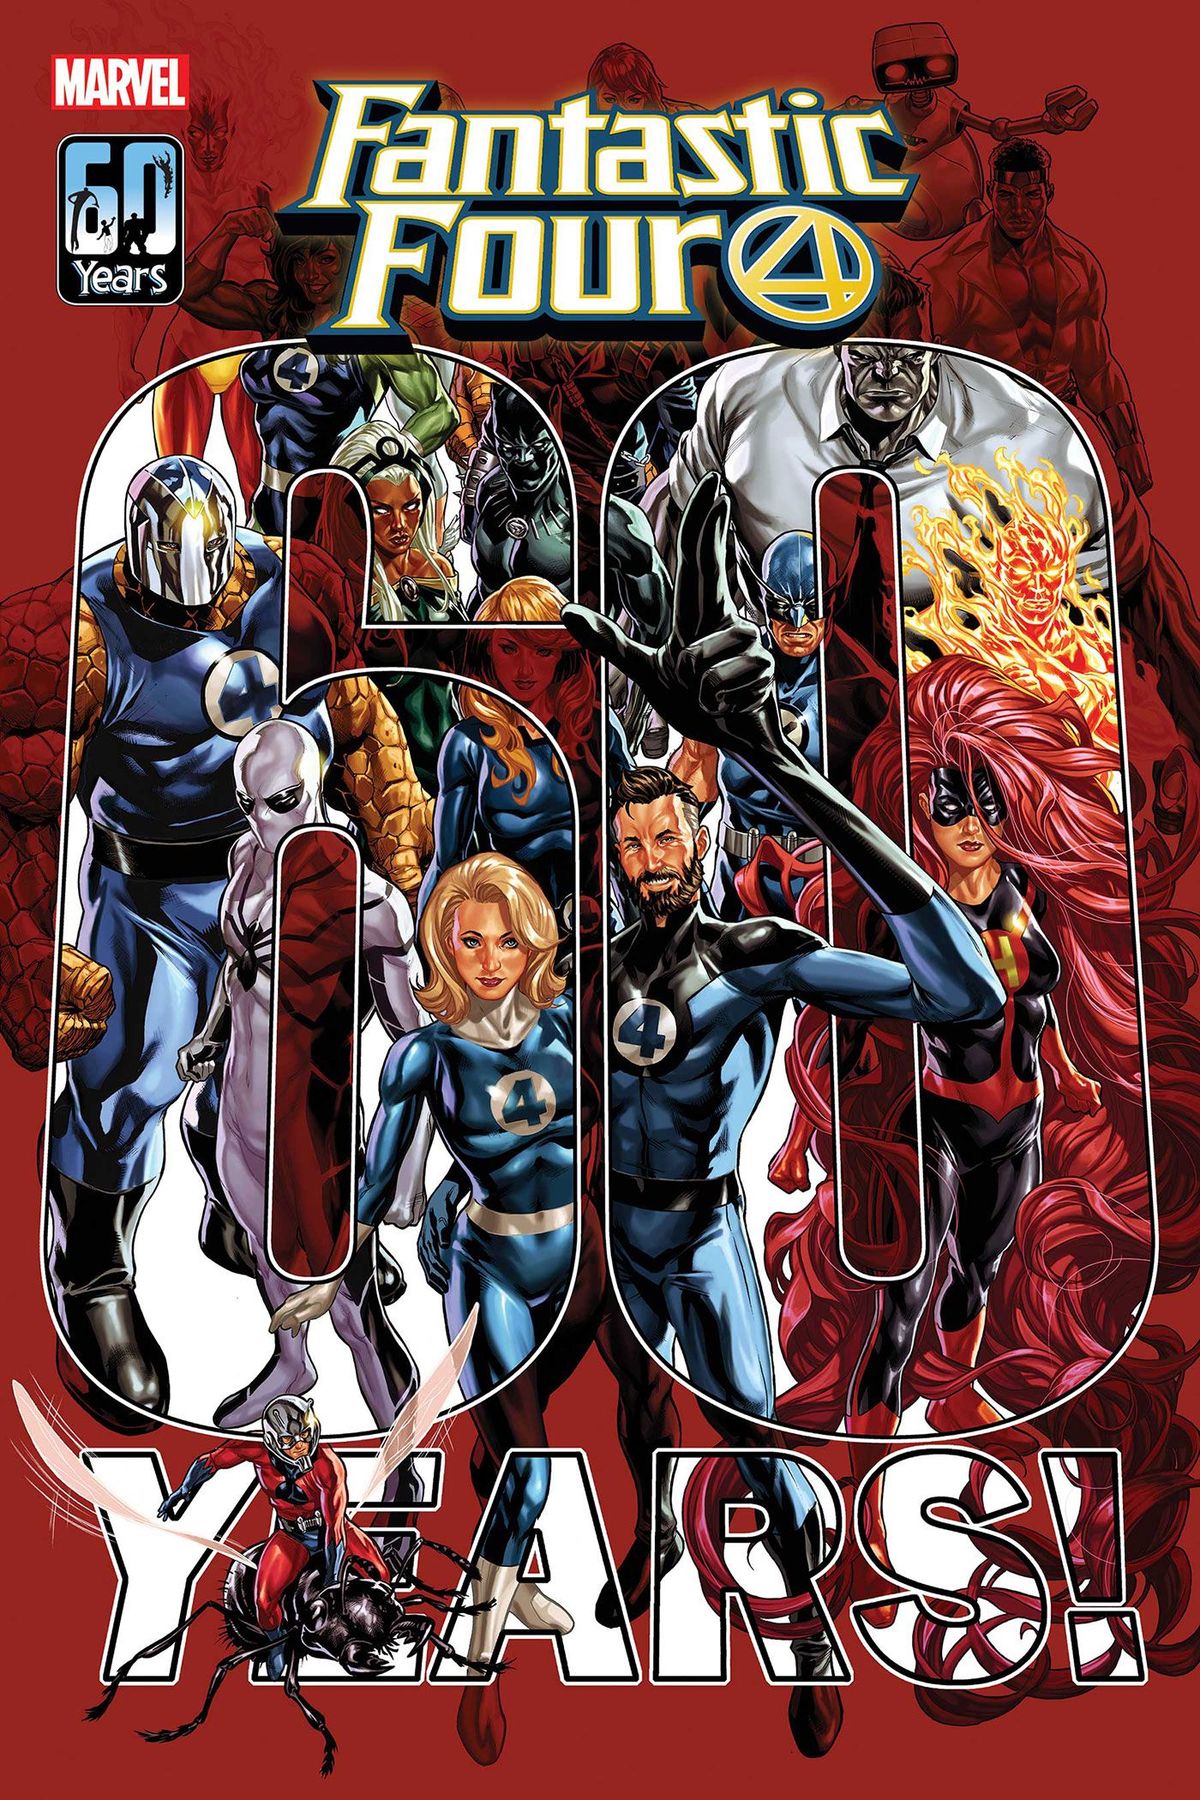 Bìa kỷ niệm 60 năm bộ phim Fantastic Four của Marvel Debuts Mark Brooks